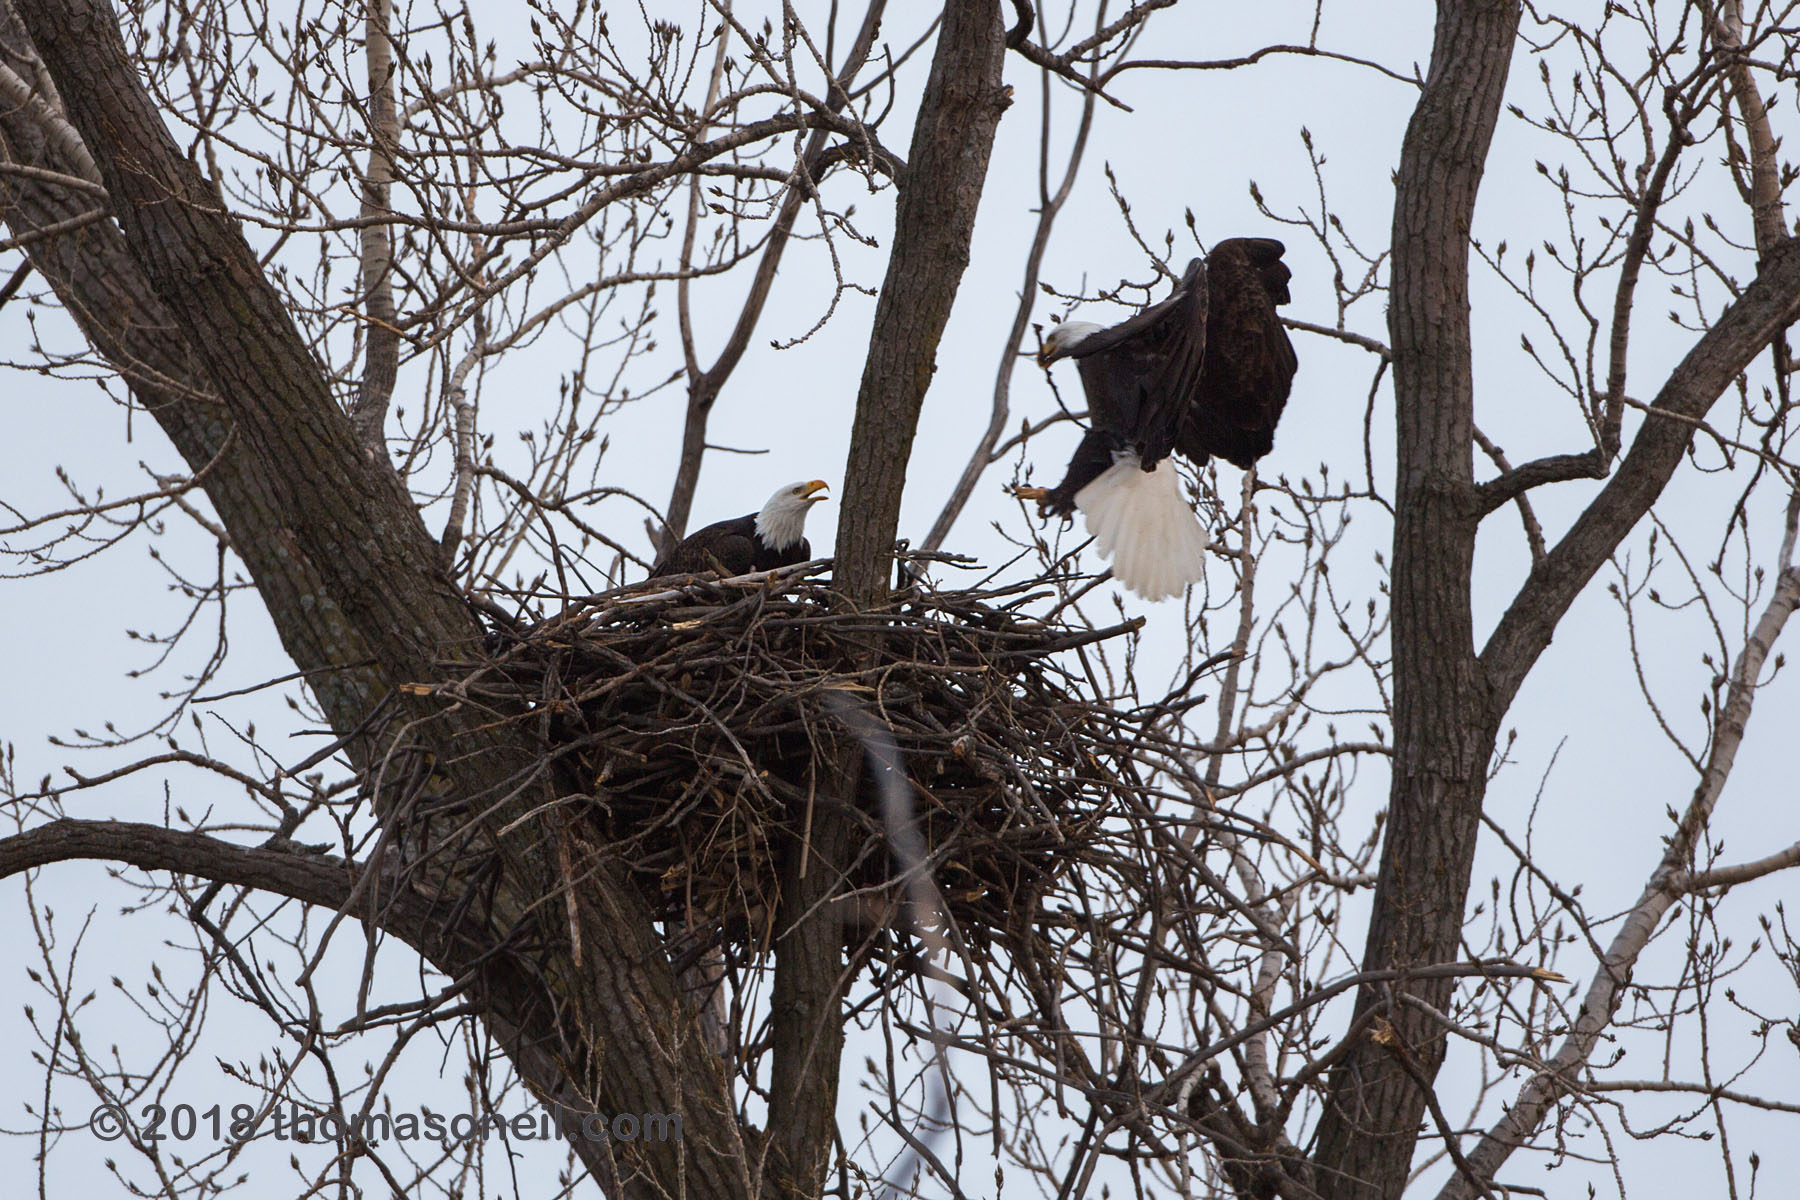 Bald eagle returning to the nest, Loess Bluffs National Wildlife Refuge, Missouri, December 2018.  Click for next photo.